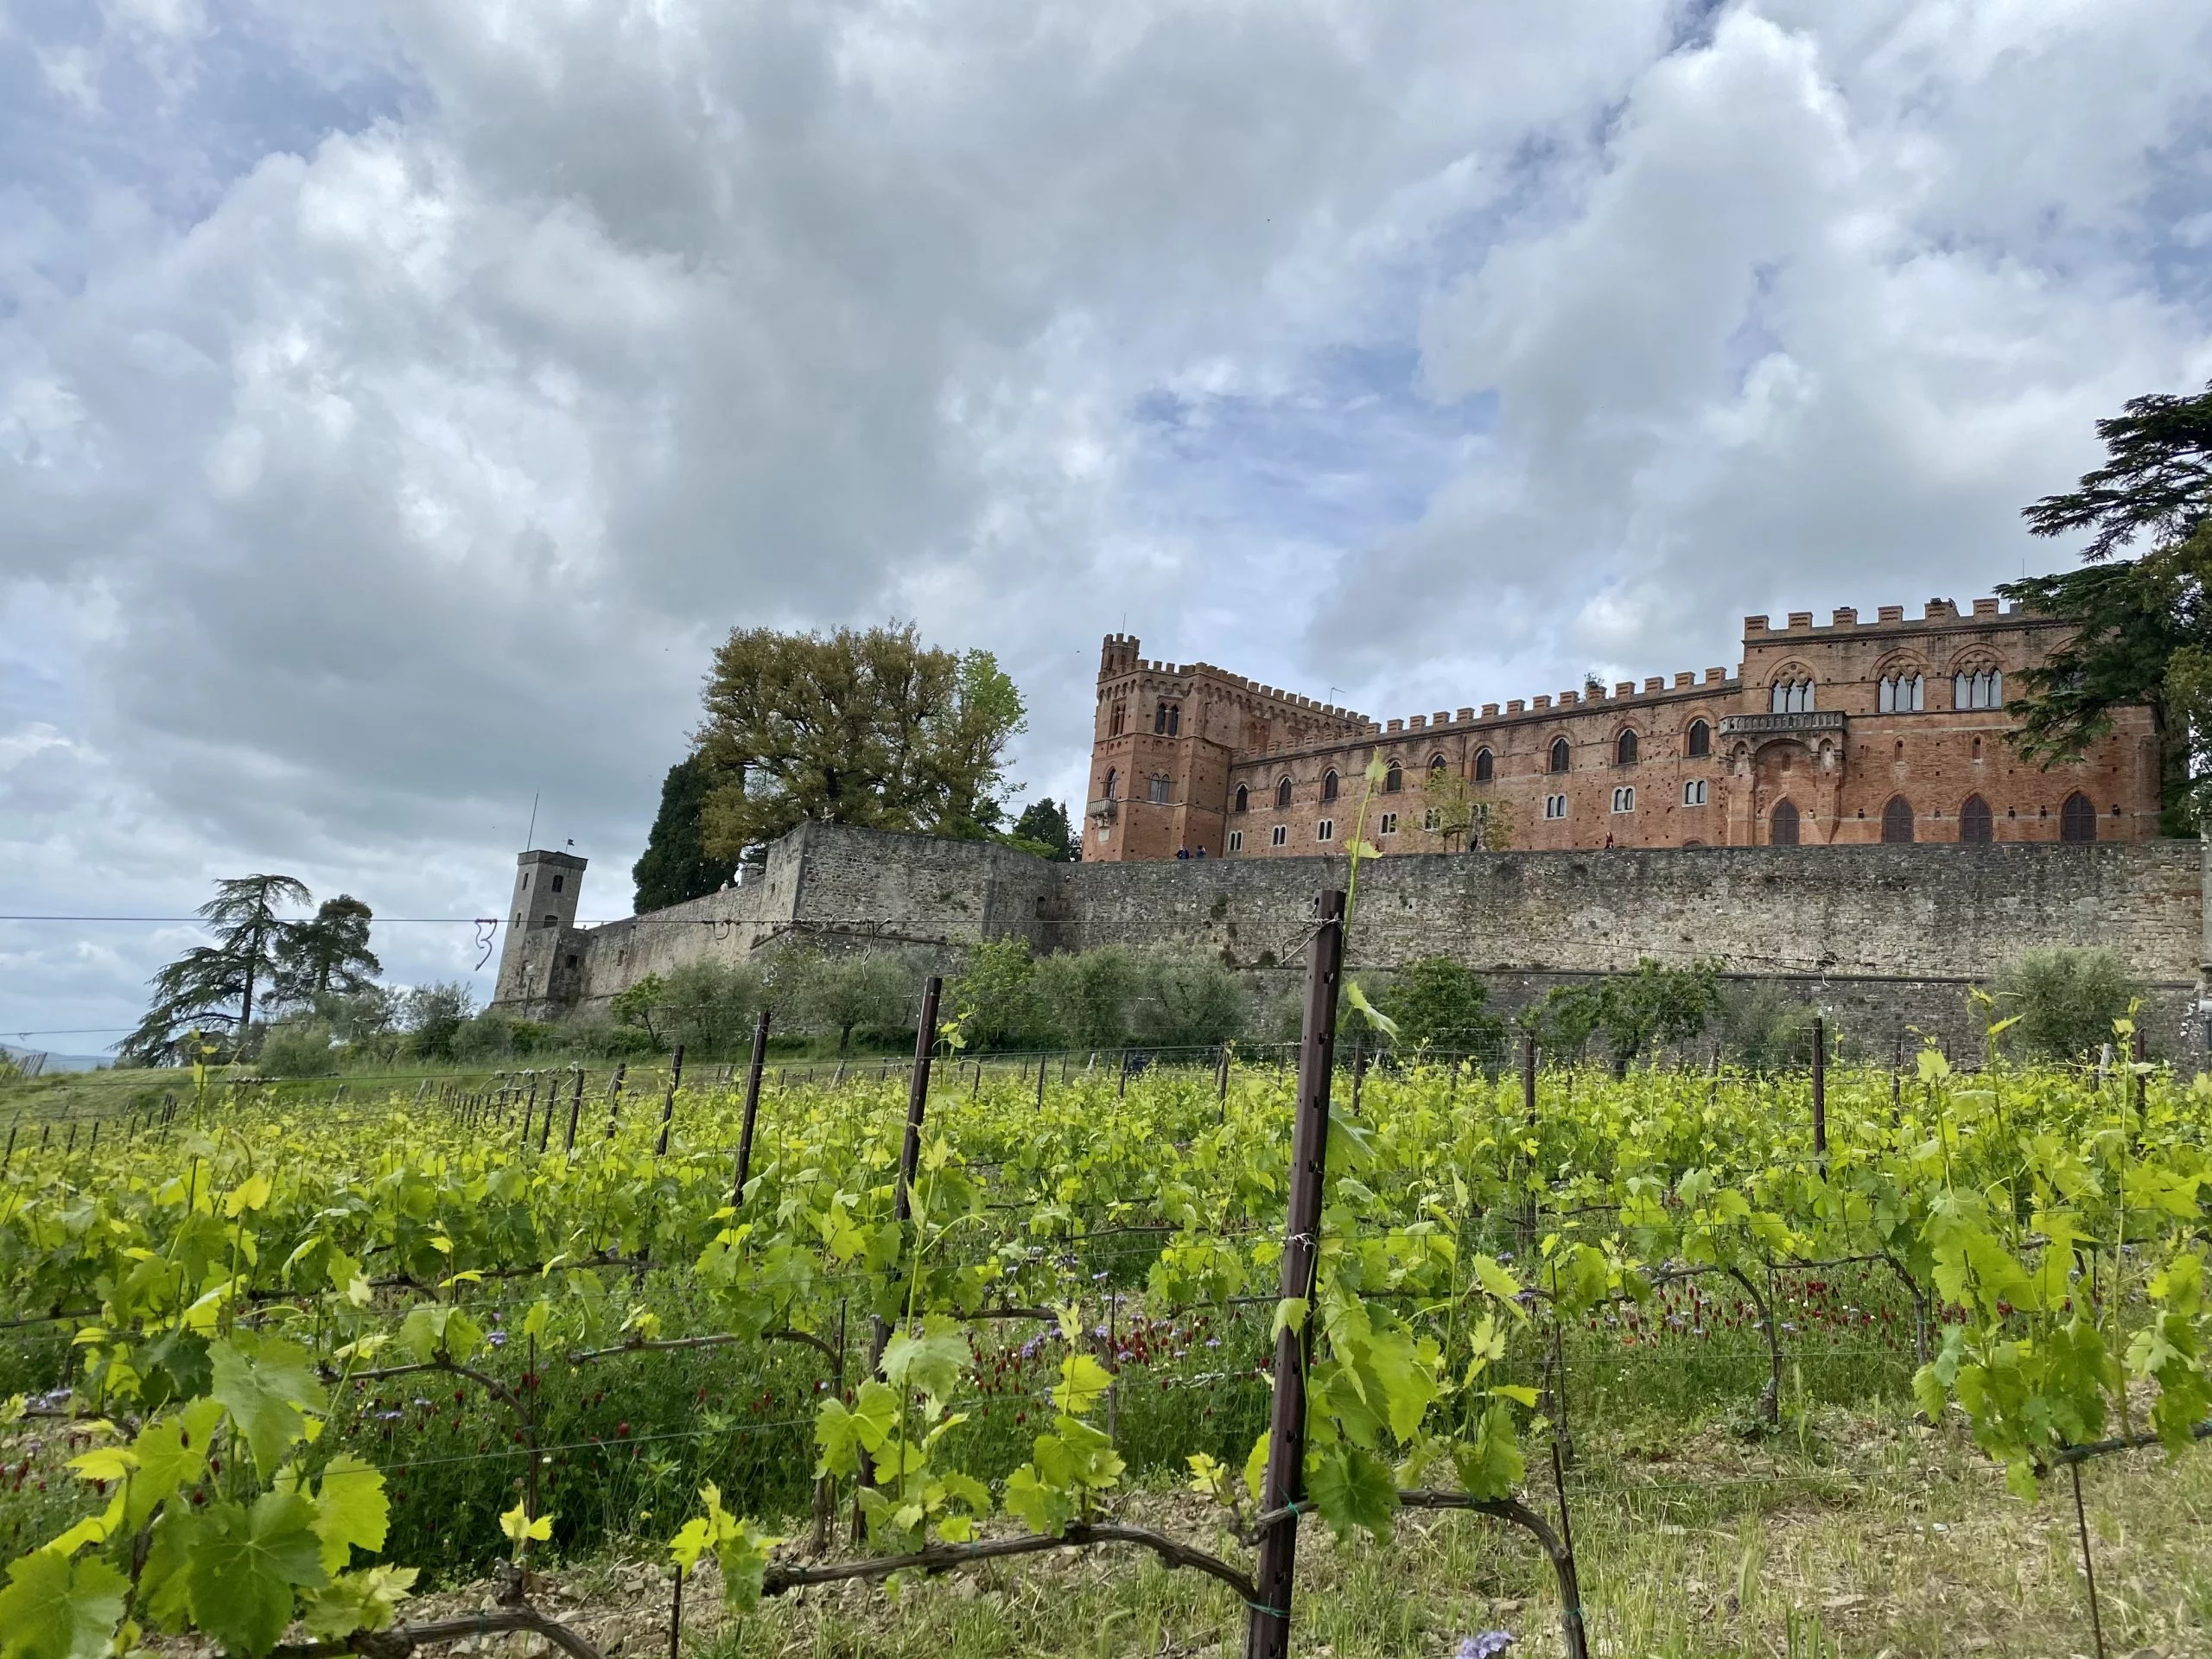 View of Brolio Castle (Castello di Brolio) from the vineyard below